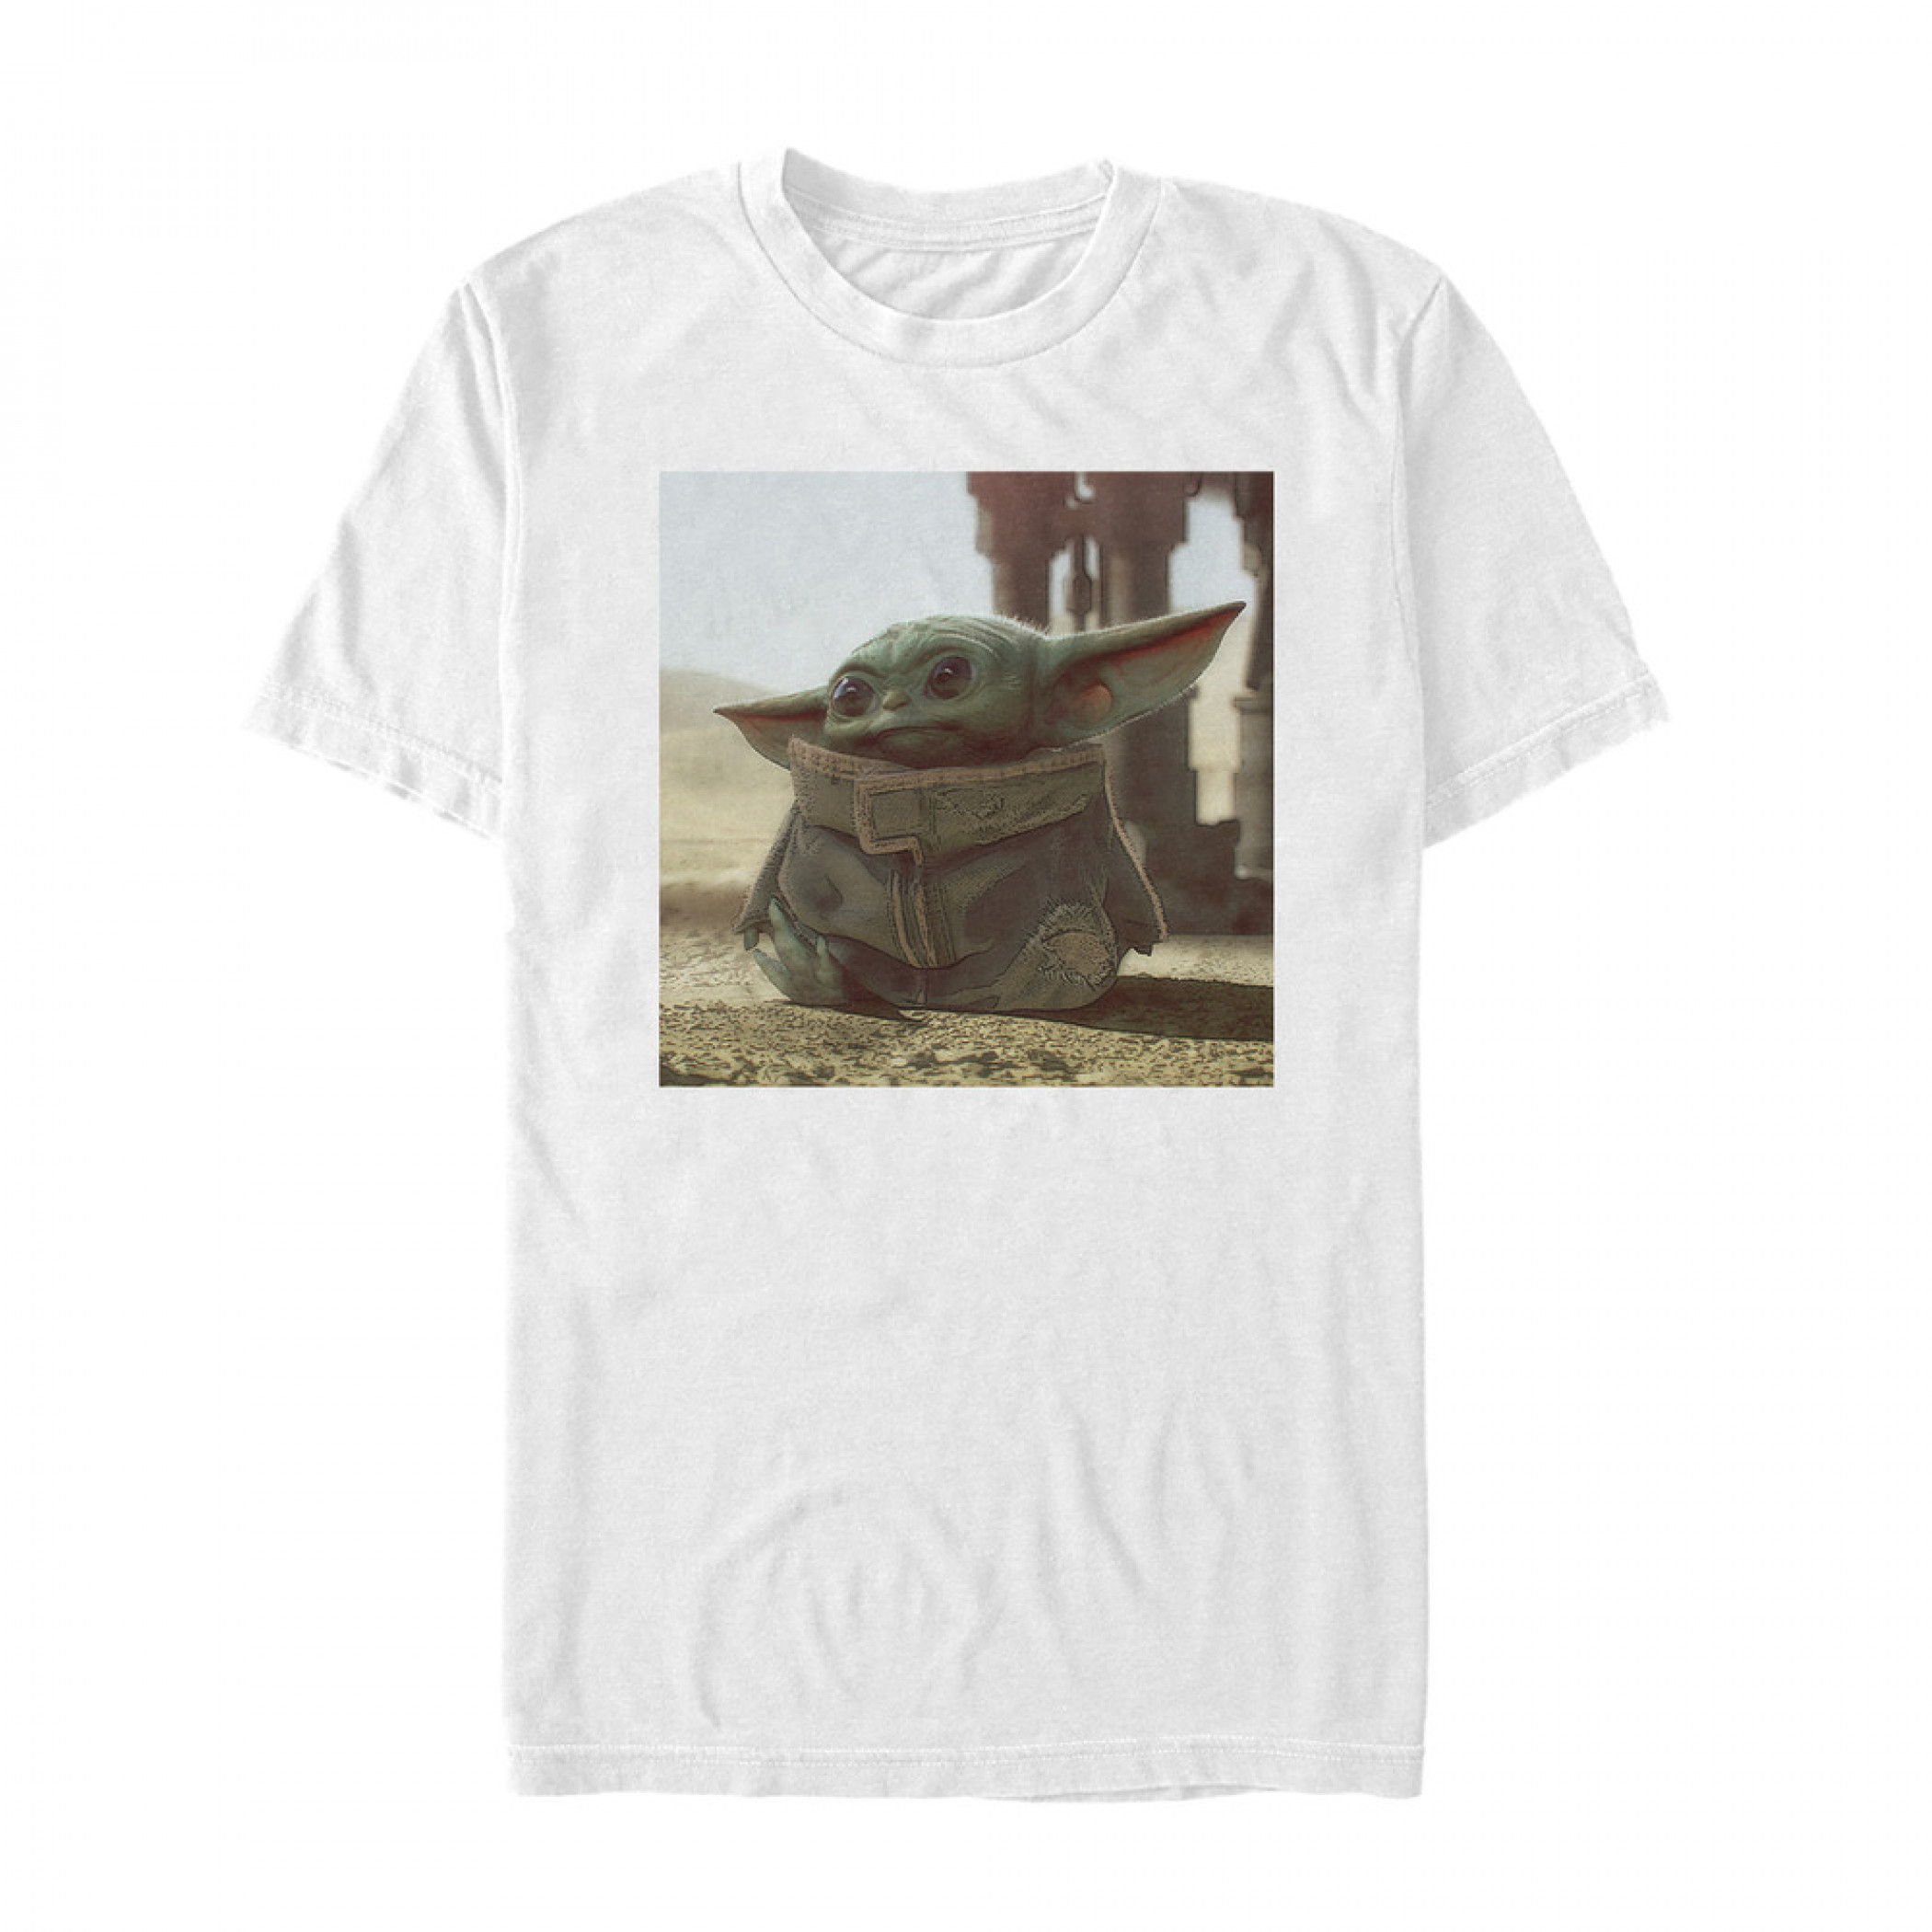 Star Wars The Mandalorian The Child White T-Shirt